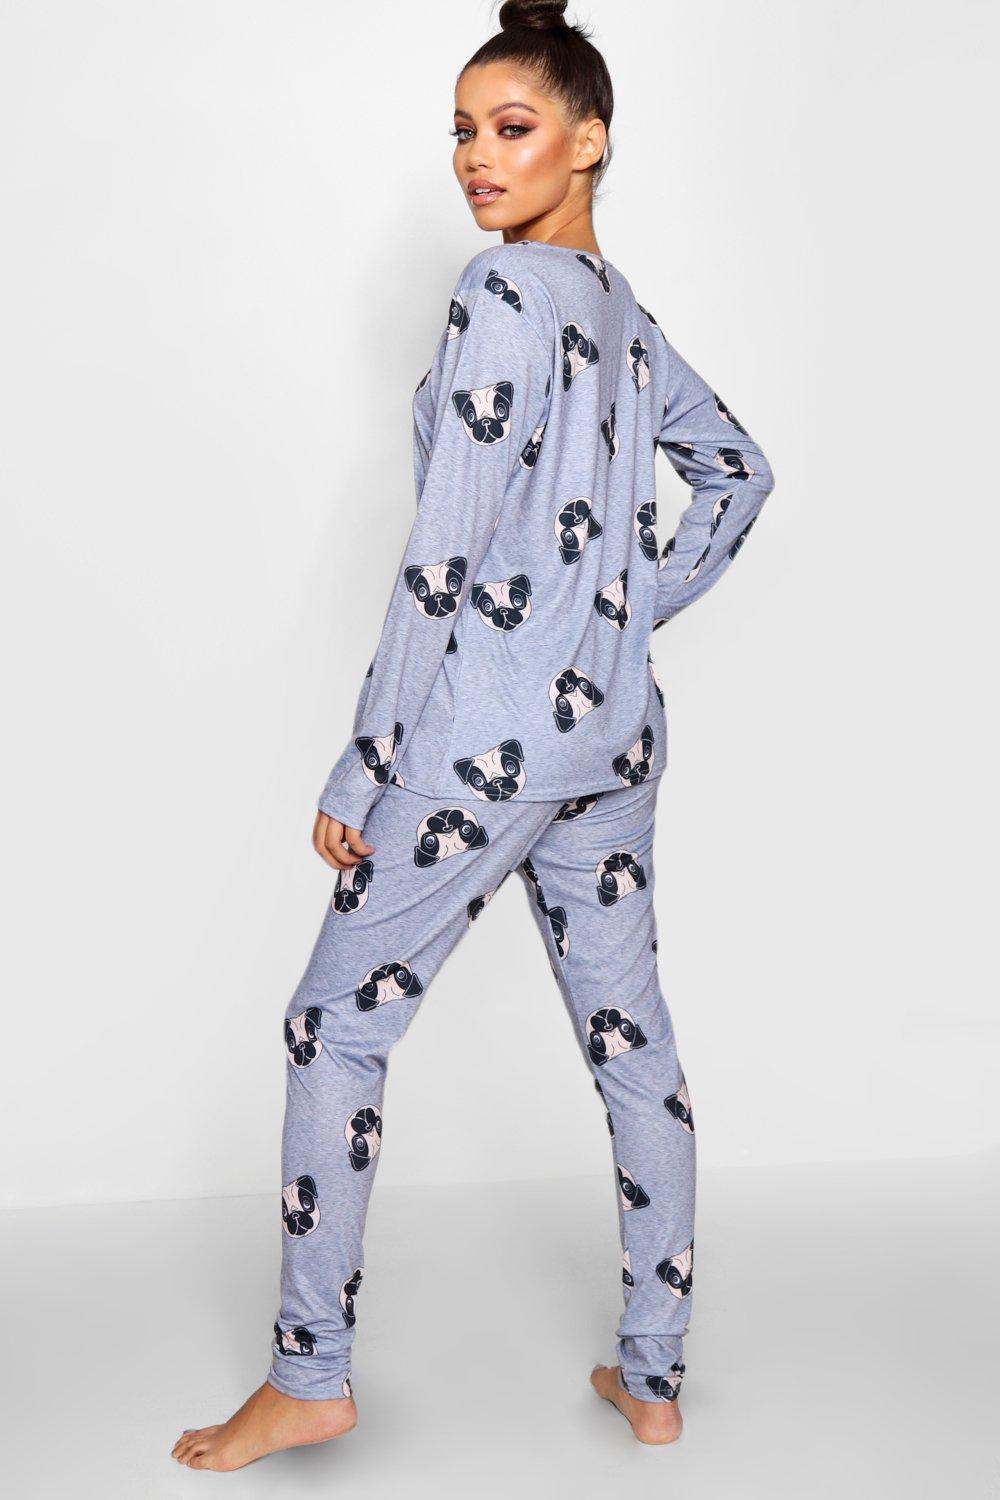 Pzuqiu Stylish Sleepwear Sets for Women Skin Friendly Pajamas Pants Pug  Corgi Elastic Jogger & Walking Soft Nightwear 2Pcs,Merry Xmas Size 4XL Crew